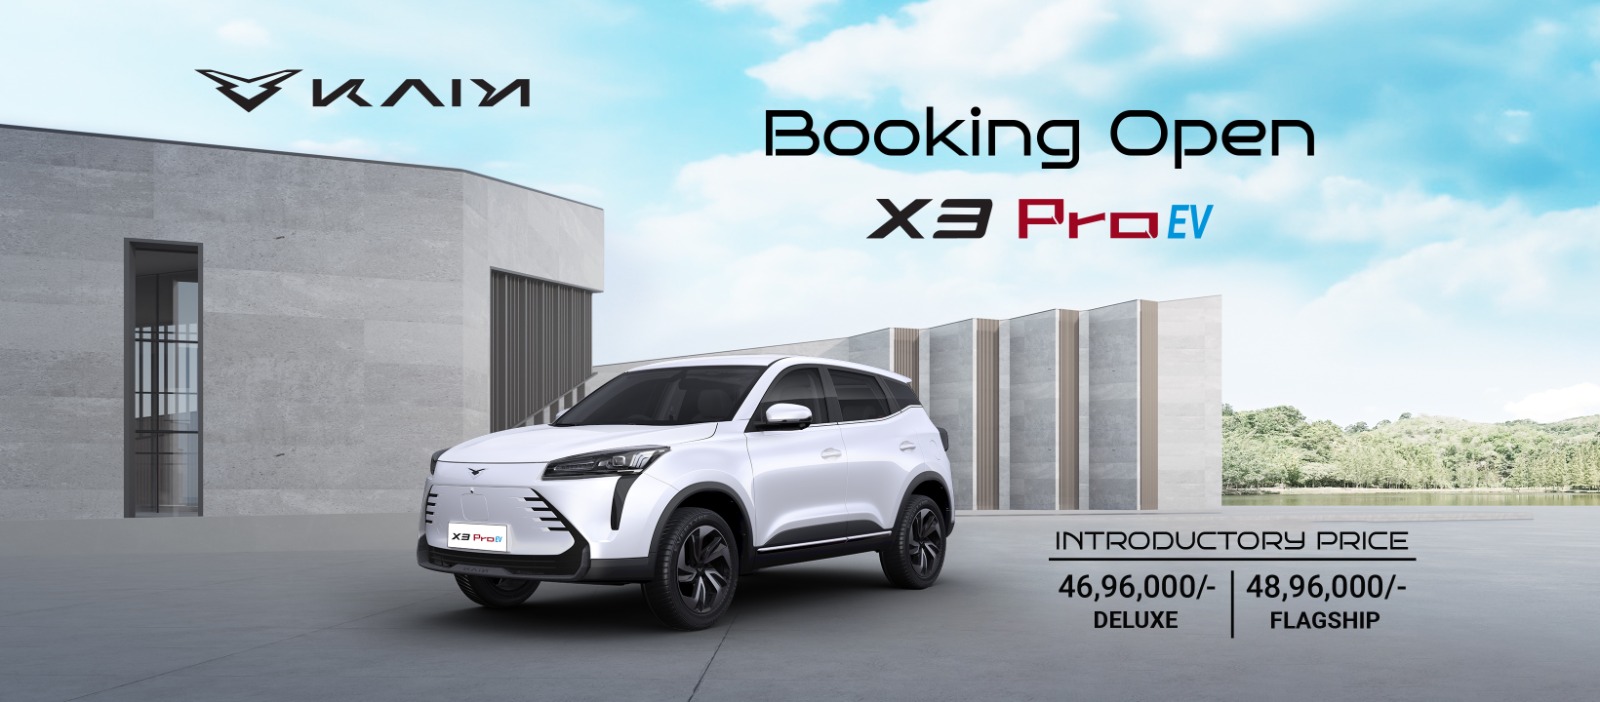 Price of Kaiyi X3 Pro EV unveiled, bookings open